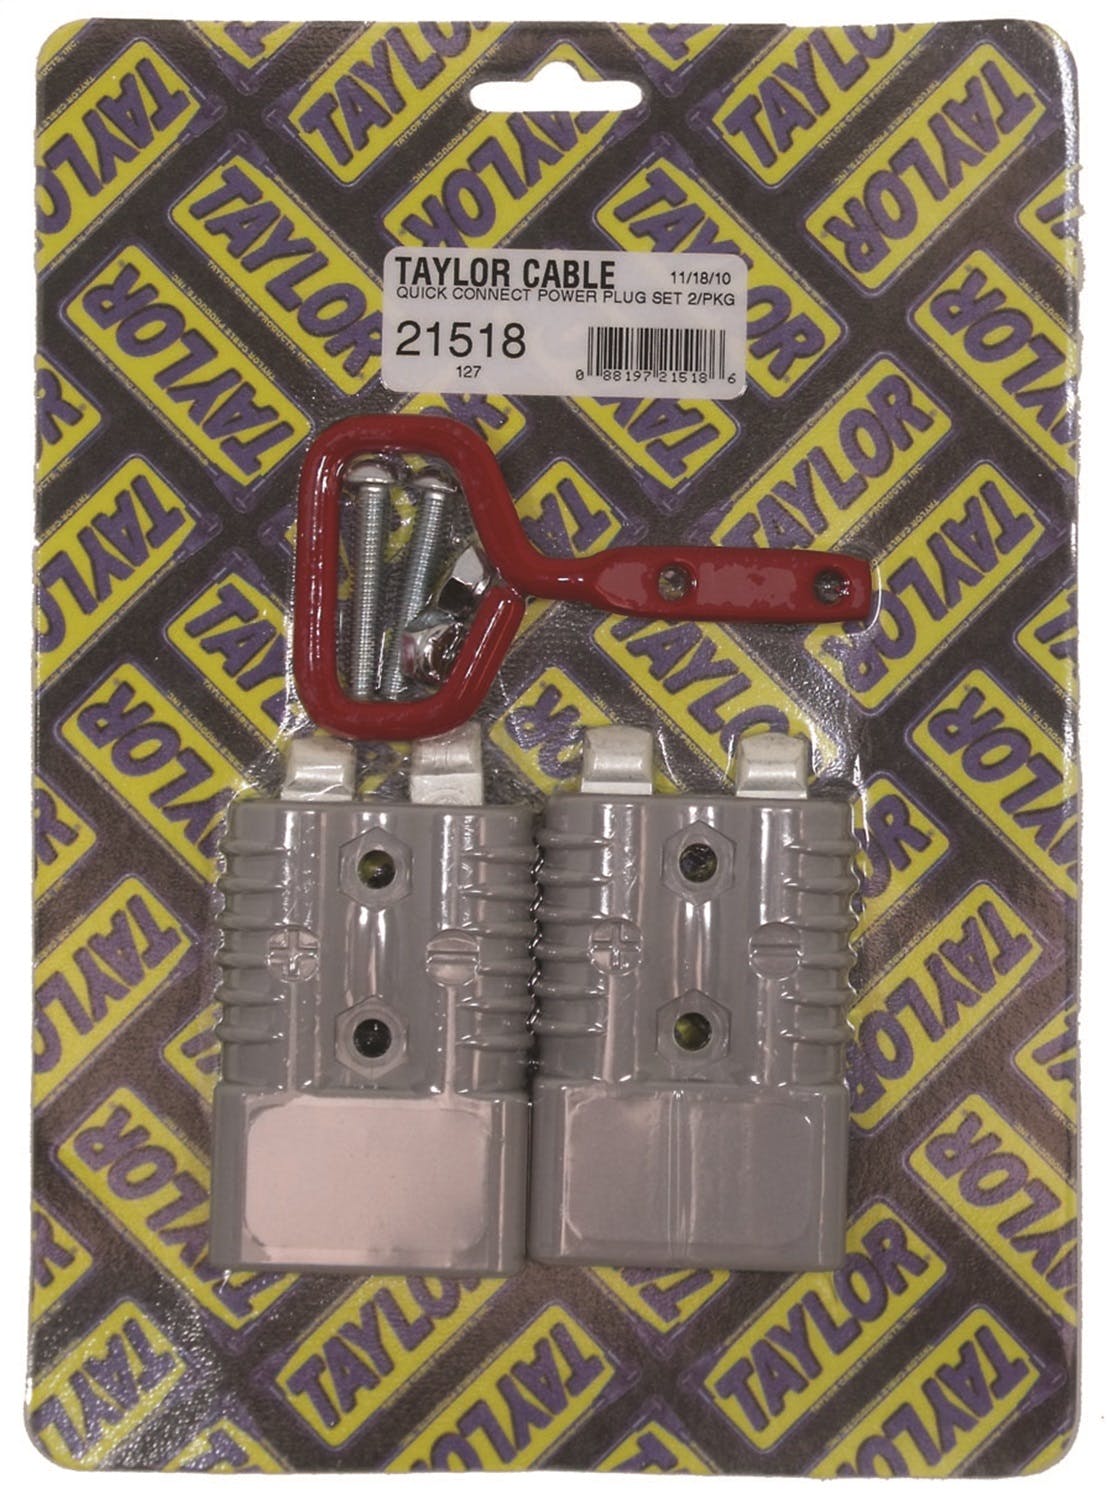 Taylor Cable Products 21518 Quick Connect Power Plug Set 2/Pkg